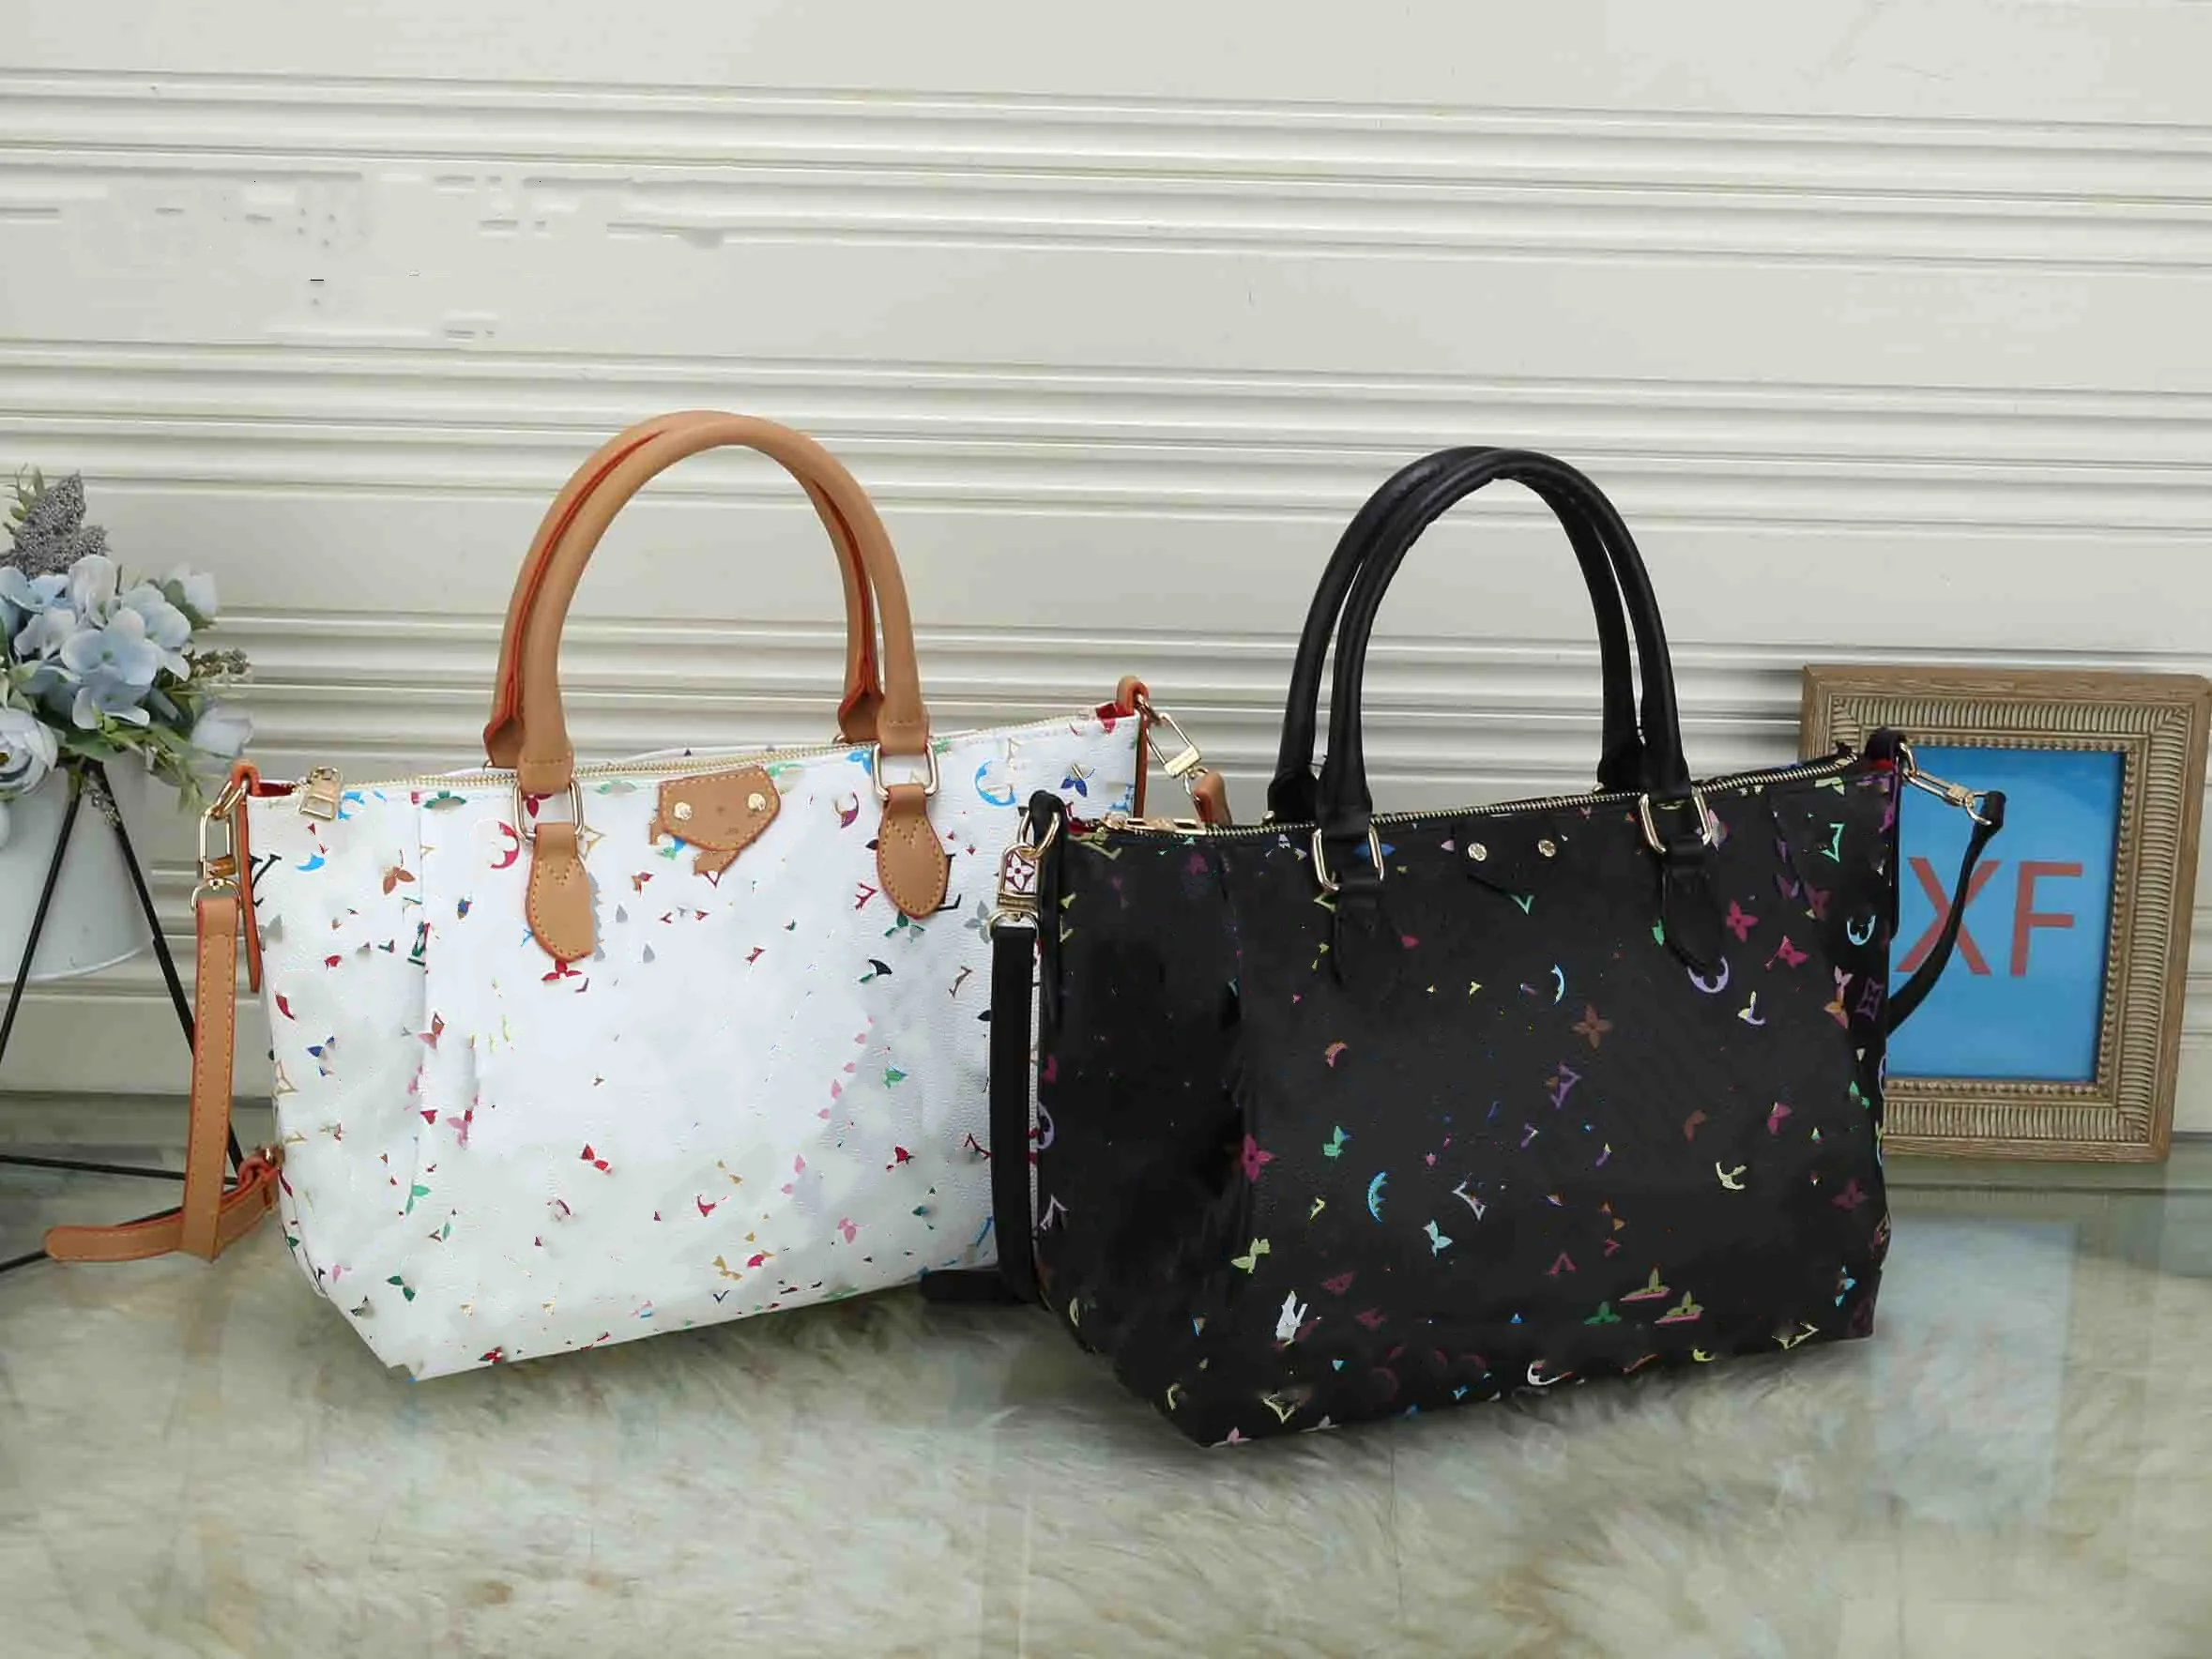 Designer bag elegant leather handbag women's and men's luxurious multi-color handbag fashionable shoulder bag classic and popular leather shopping bag